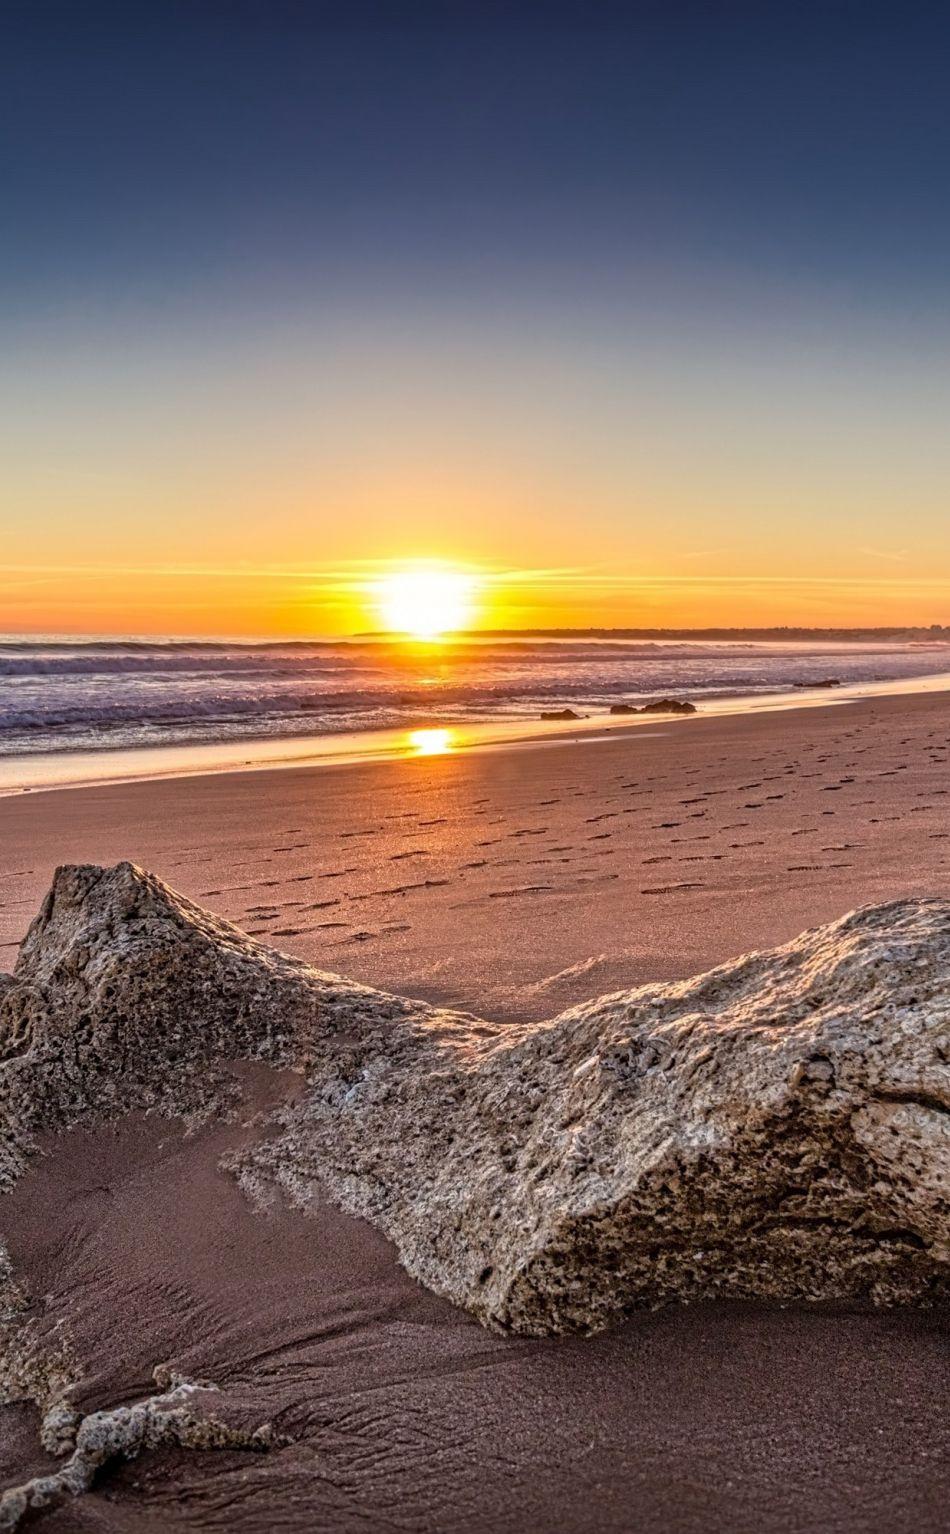 Sunrise Beach Iphone Wallpapers - Top Free Sunrise Beach Iphone